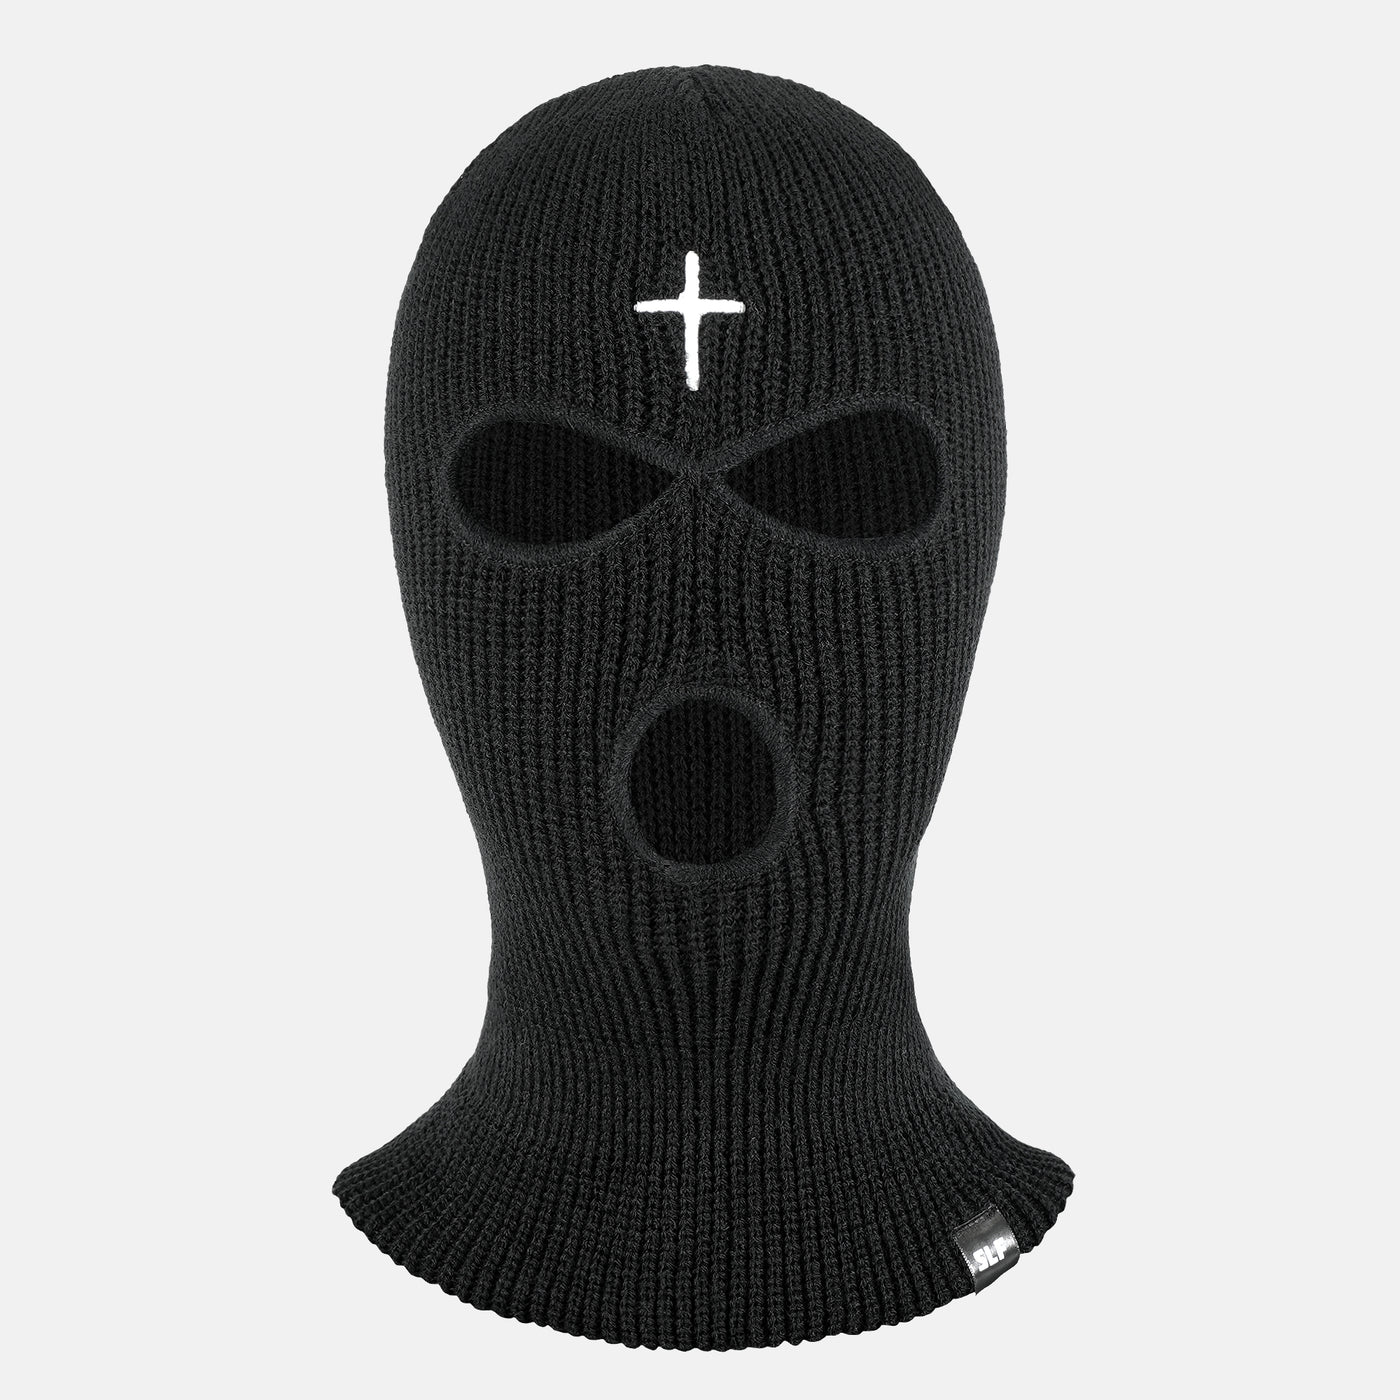 Faith Cross Black Ski Mask